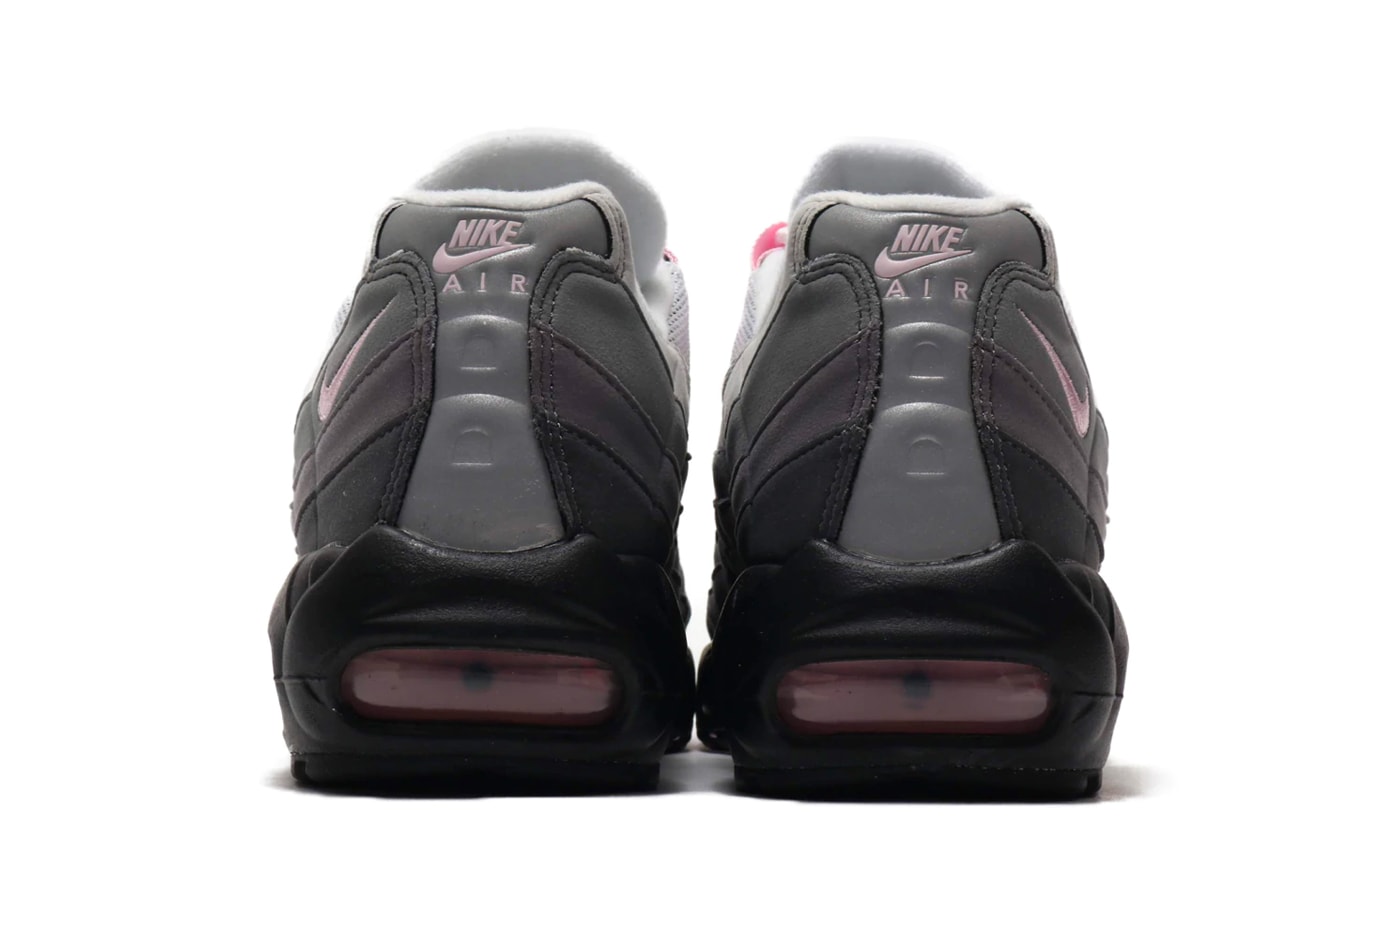 Nike Air Max 95 Black Pink Foam cj0588 001 GUNSMOKE GREY FOG menswear streetwear swoosh sneakers shoes footwear kicks trainers runners low top spring summer 2020 collectionq